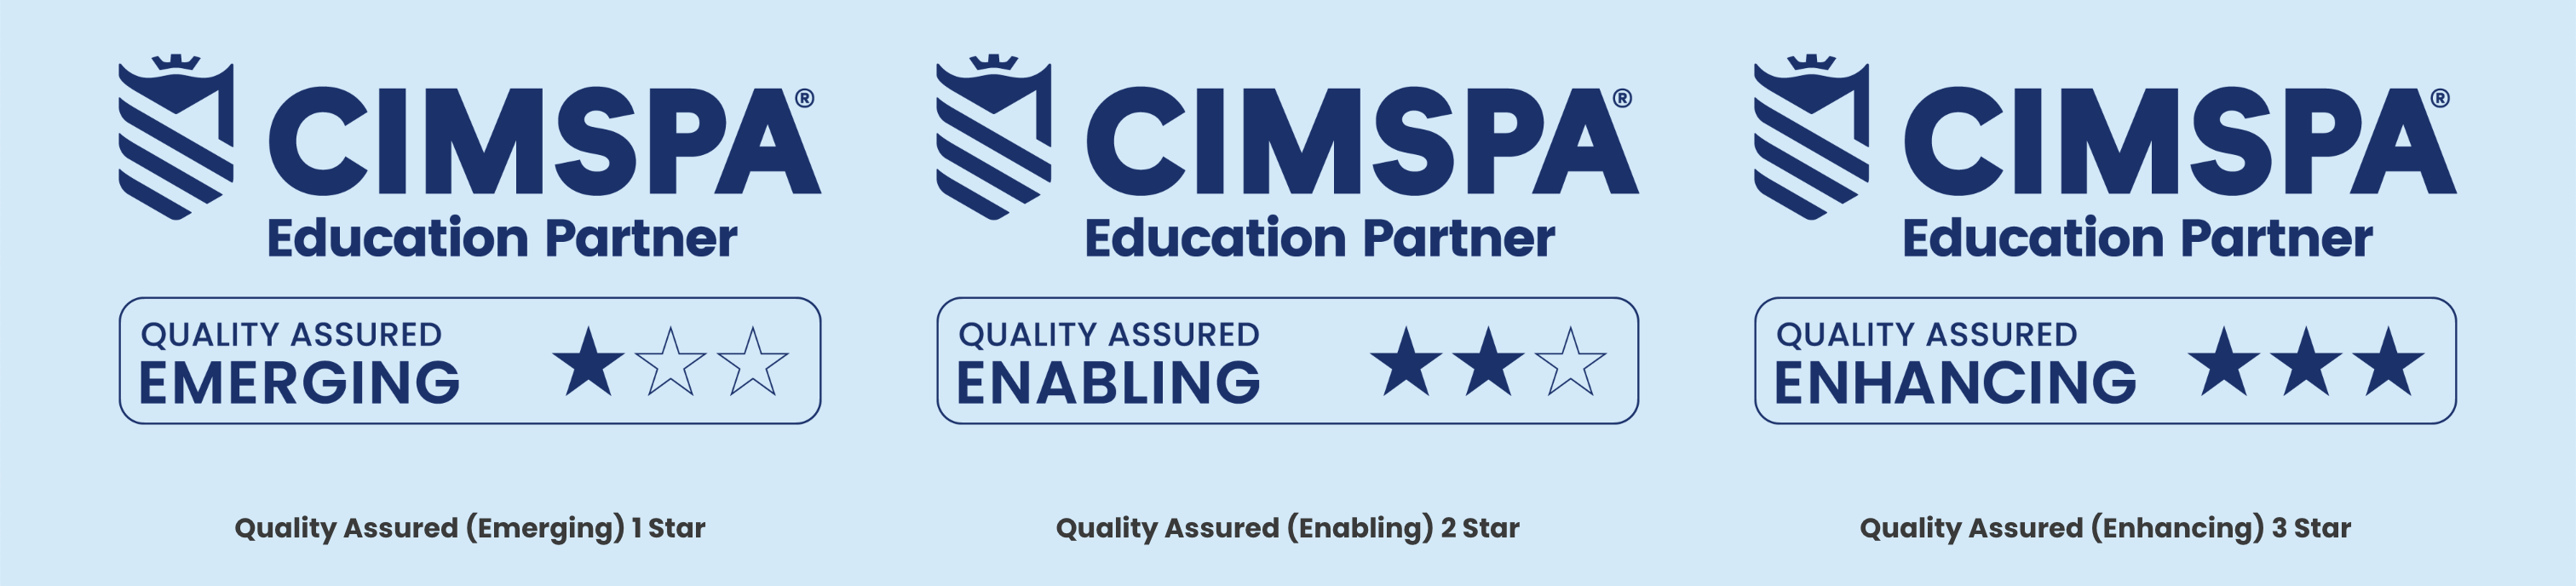 CIMSPA quality ratings